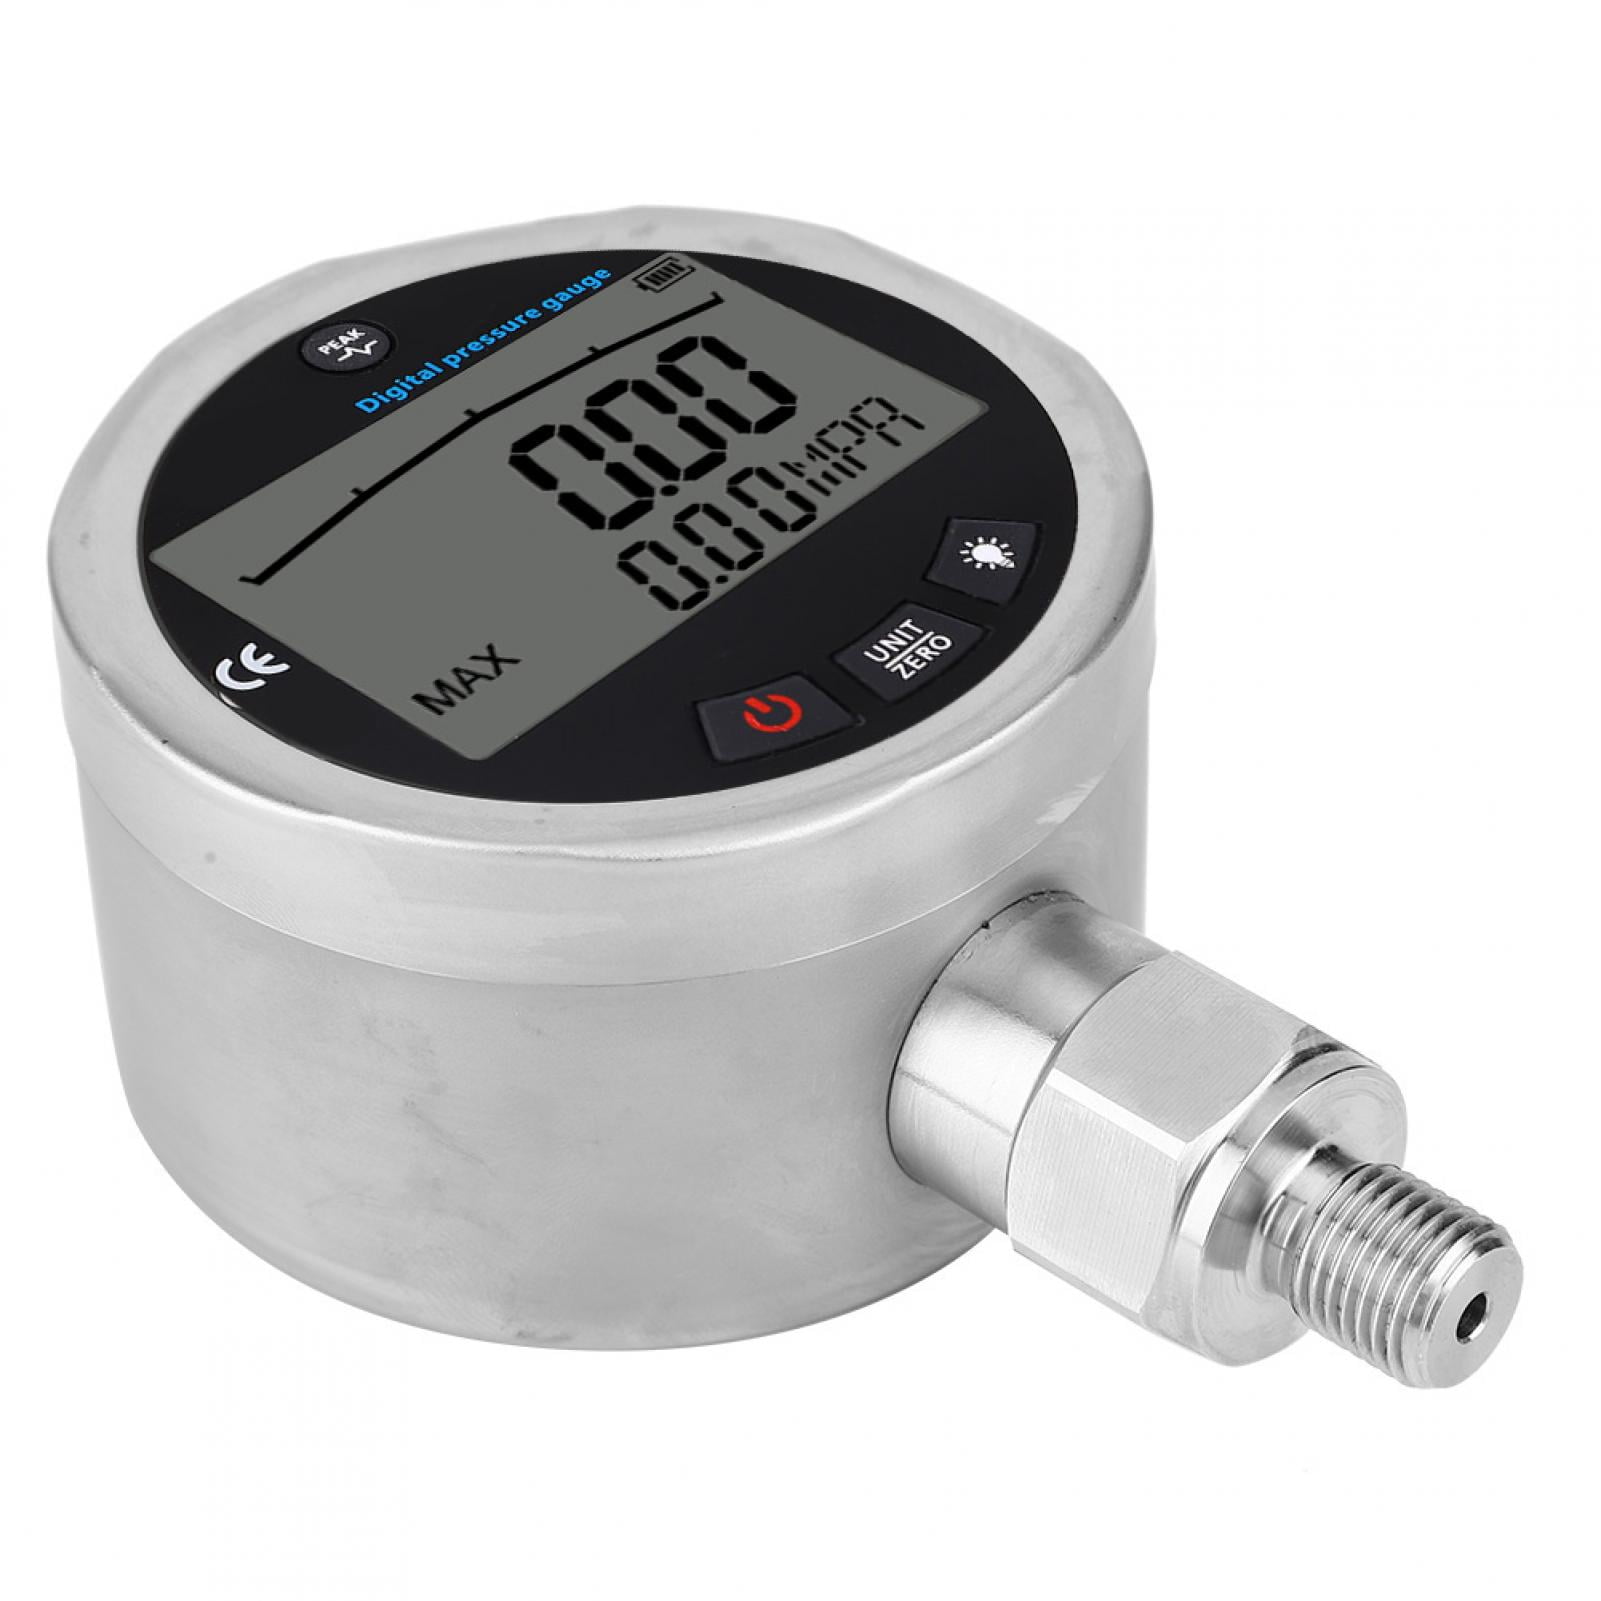 Pressure Gauge Sugoyi Battery Powered Pressure Meter Pressure Tester Meter for Work Tool